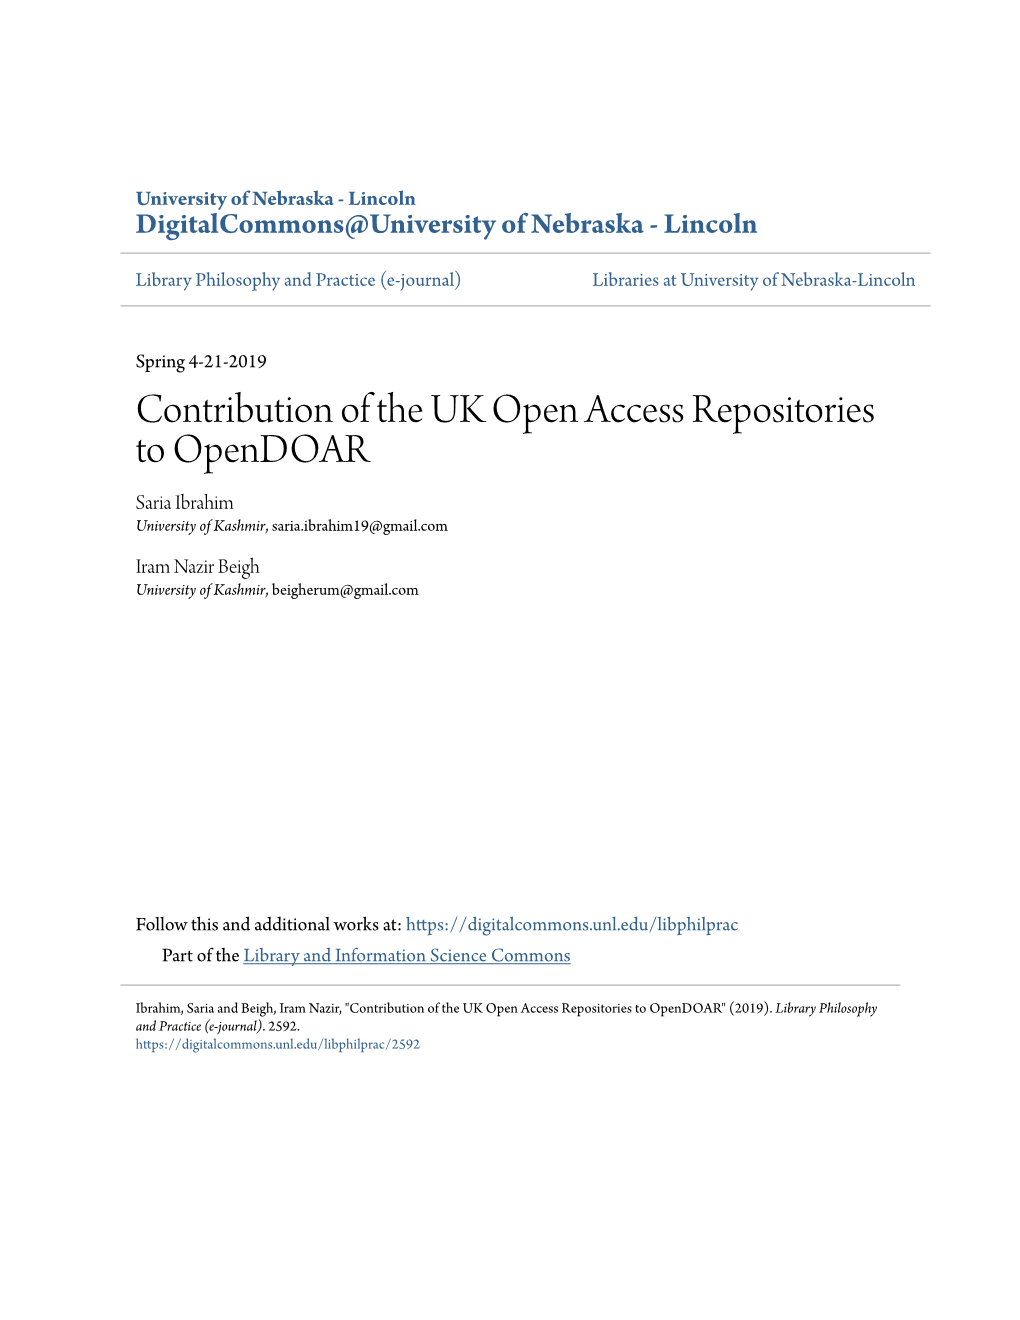 Contribution of the UK Open Access Repositories to Opendoar Saria Ibrahim University of Kashmir, Saria.Ibrahim19@Gmail.Com